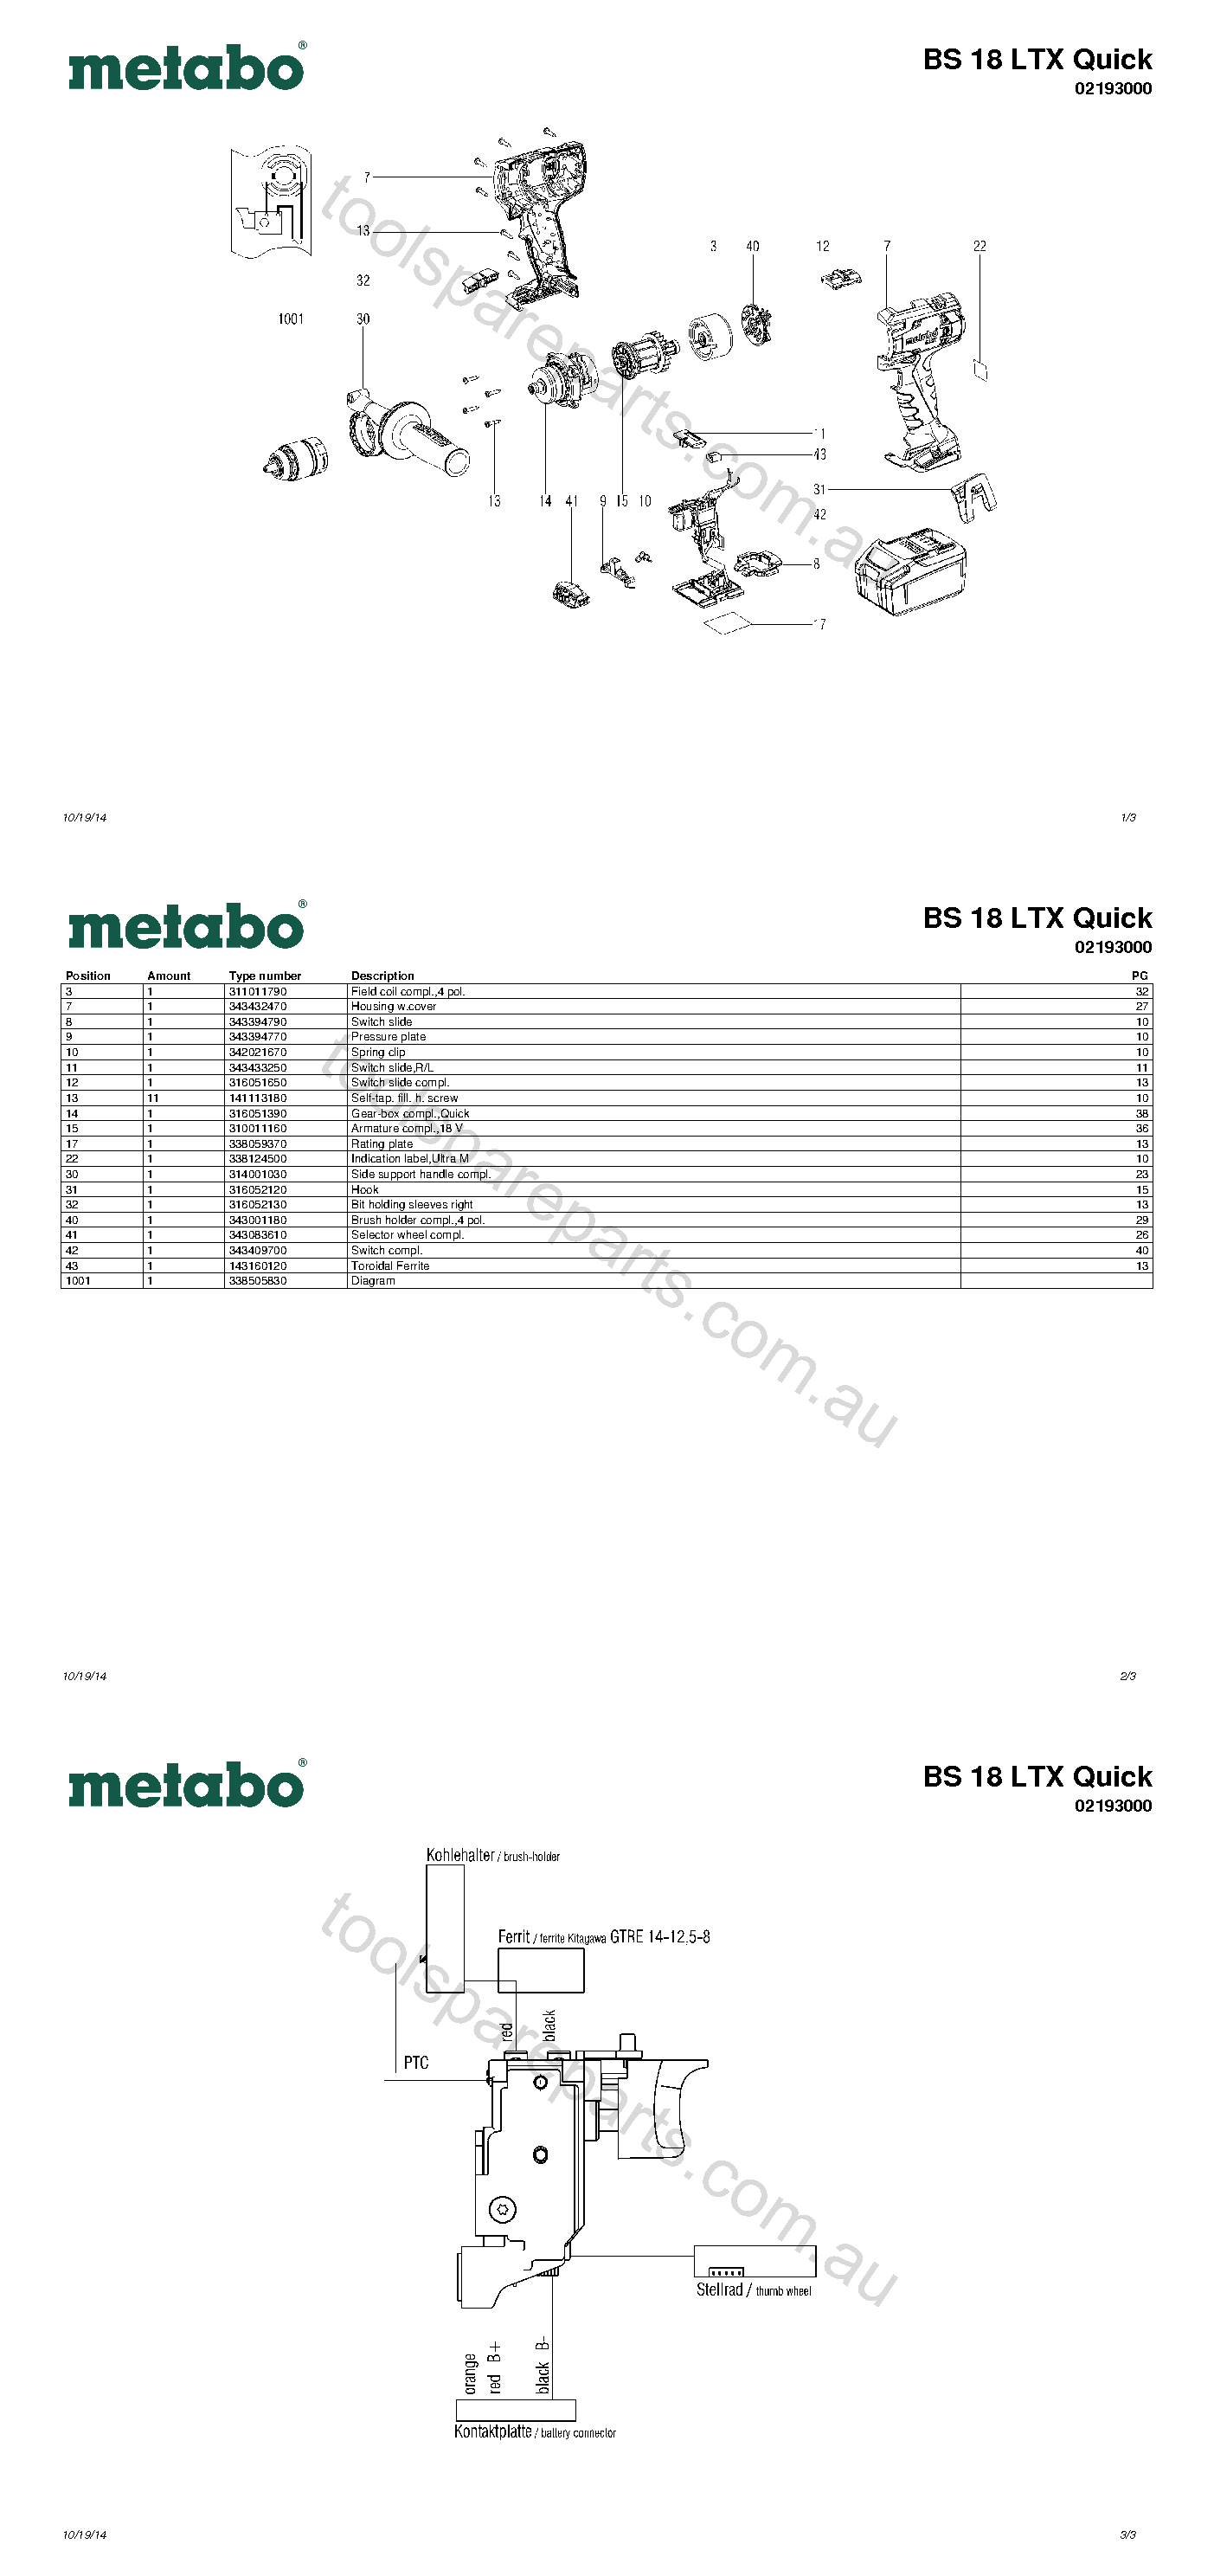 Metabo BS 18 LTX Quick 02193000  Diagram 1